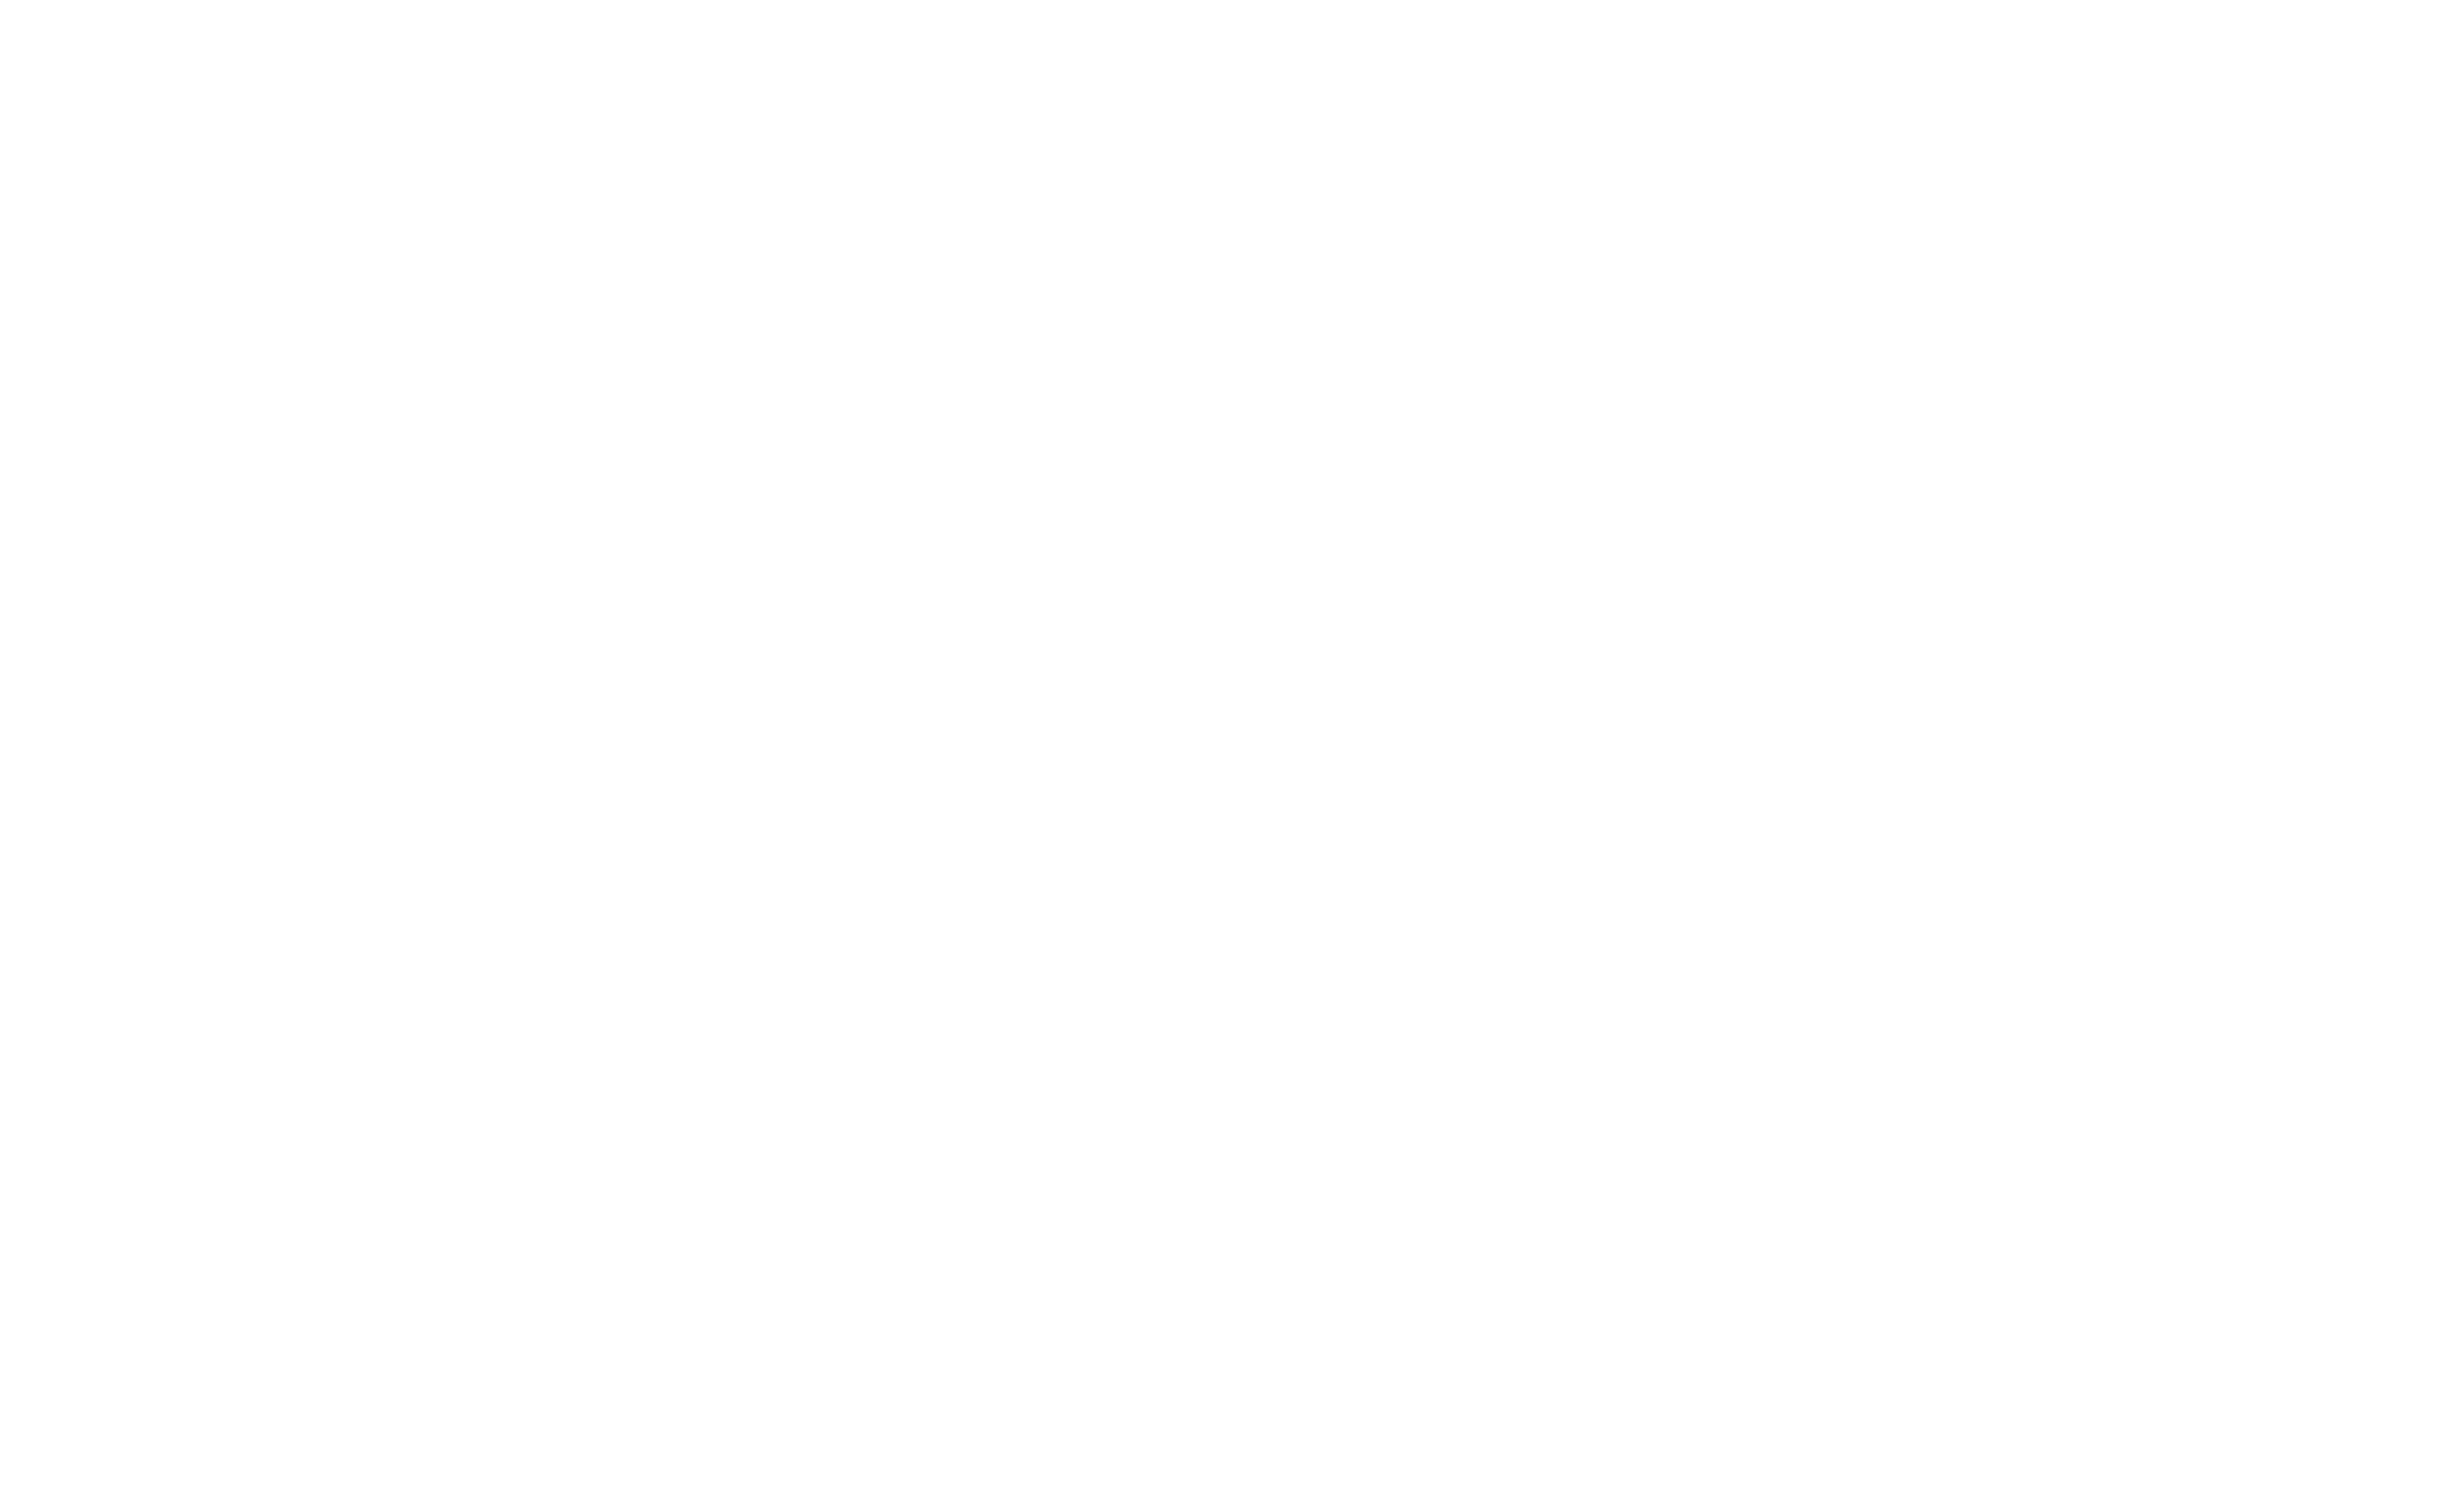 Succor Africa